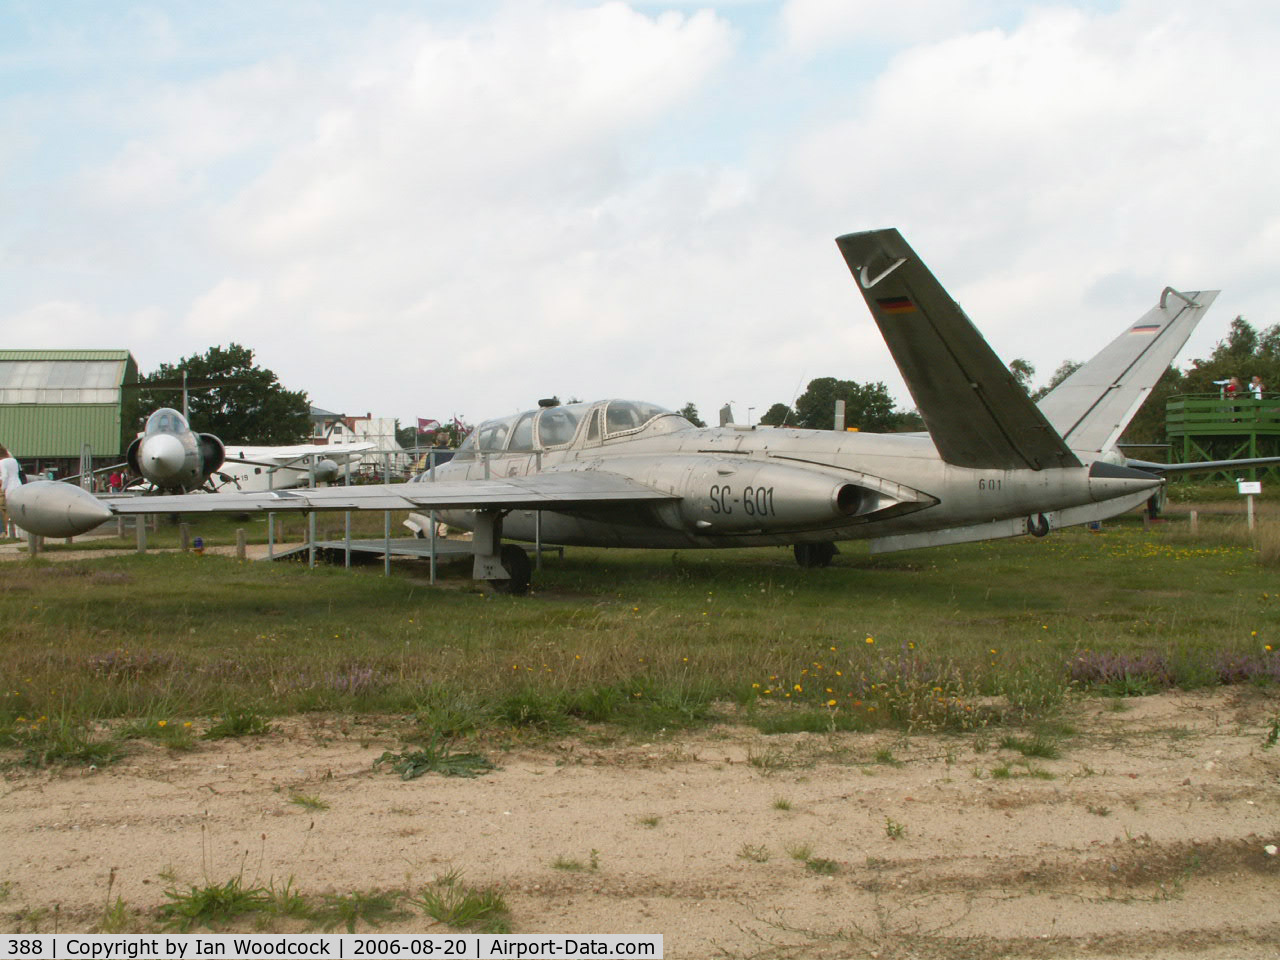 388, Fouga CM-170R Magister C/N 388, Fouga CM-170R/Preserved Nordholz Aeronauticum (marked as SC+601)